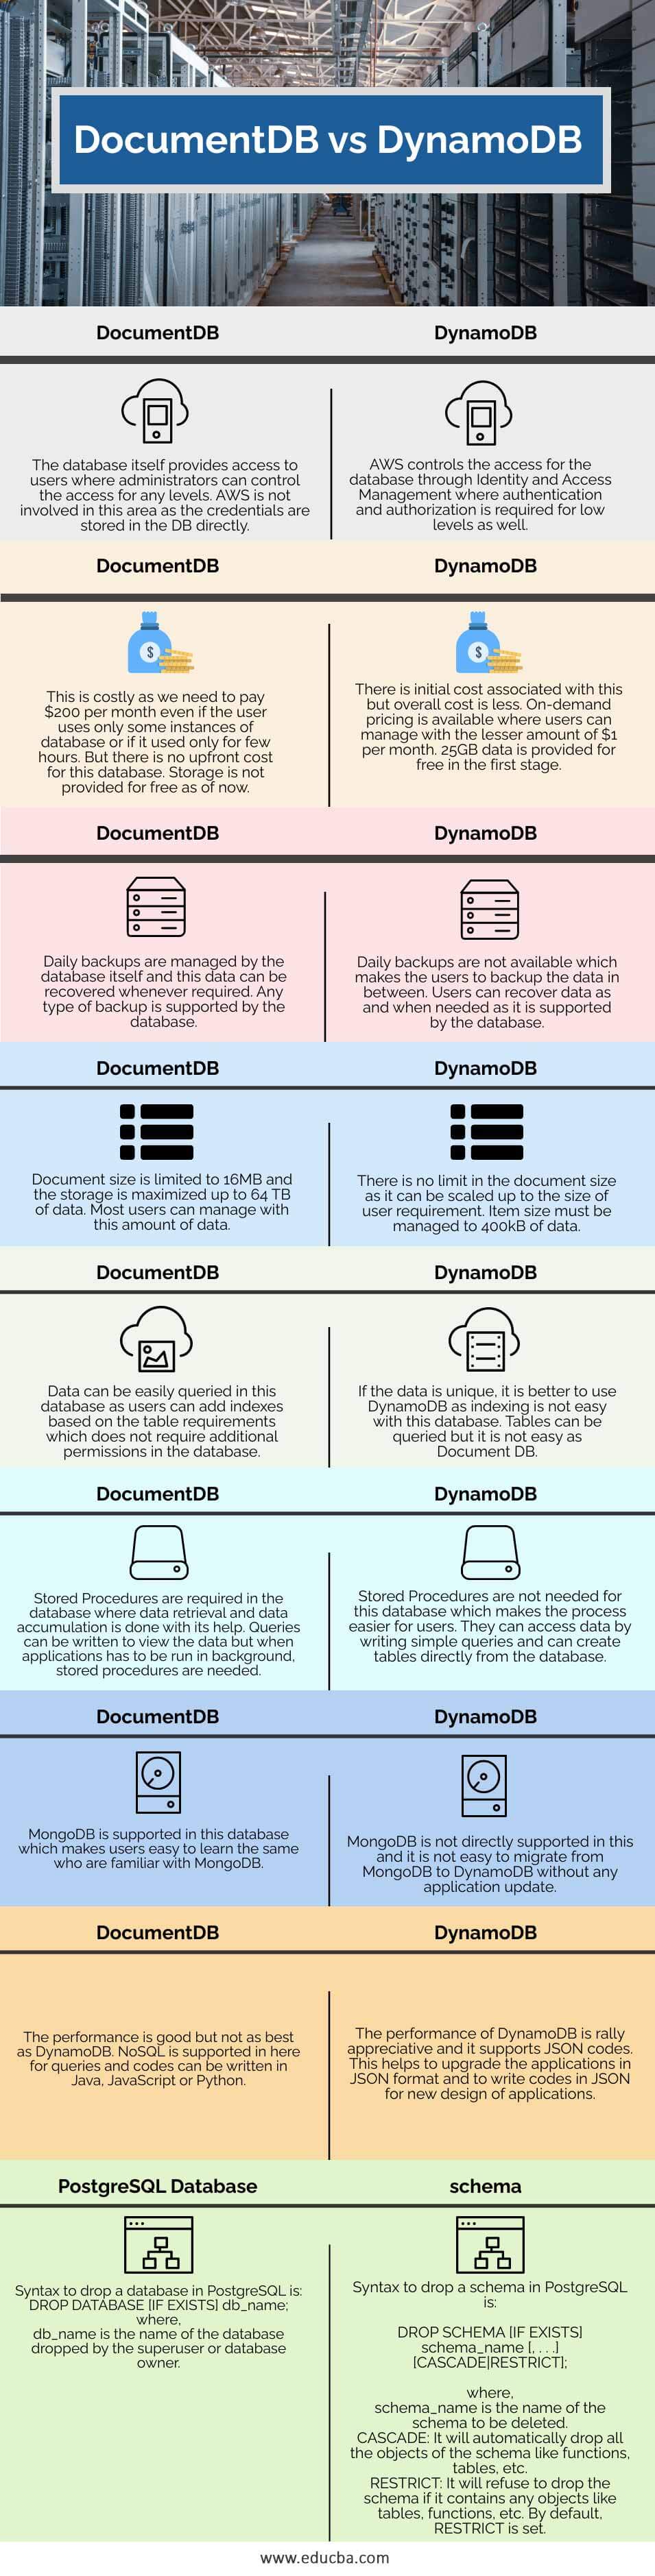 DocumentDB-vs-DynamoDB-info